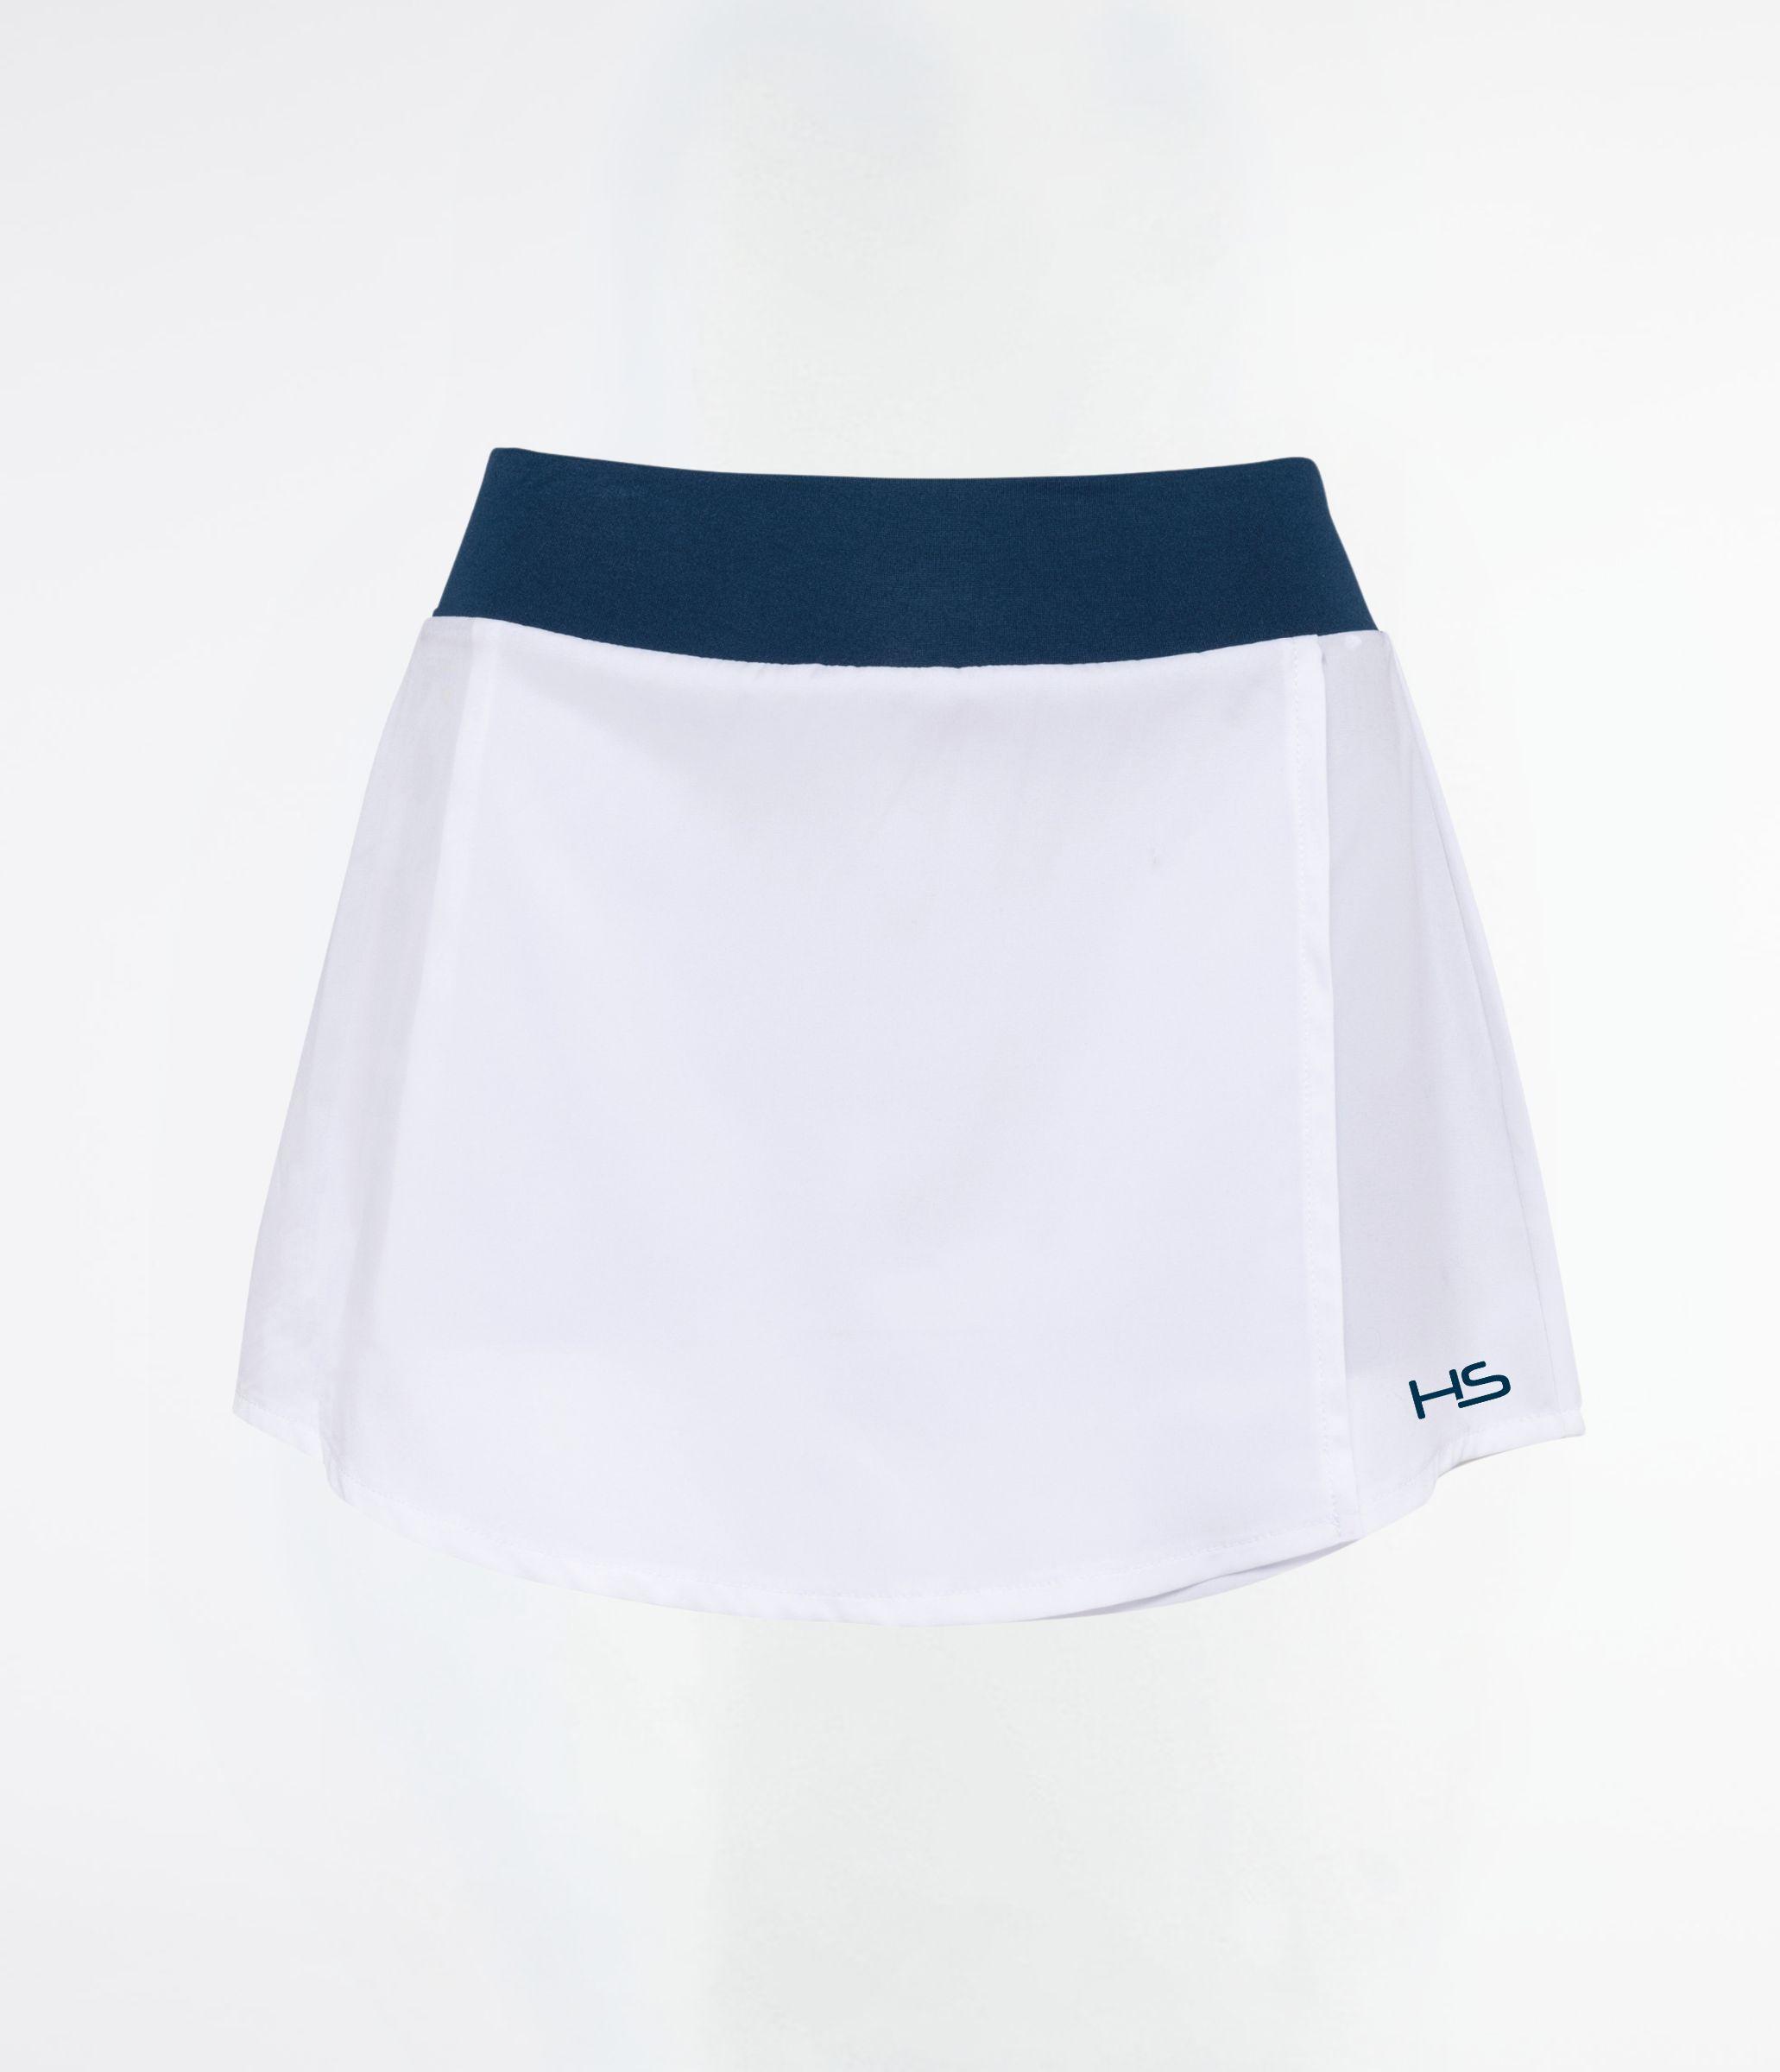 Gonna con shorts tennis/padel white/navy